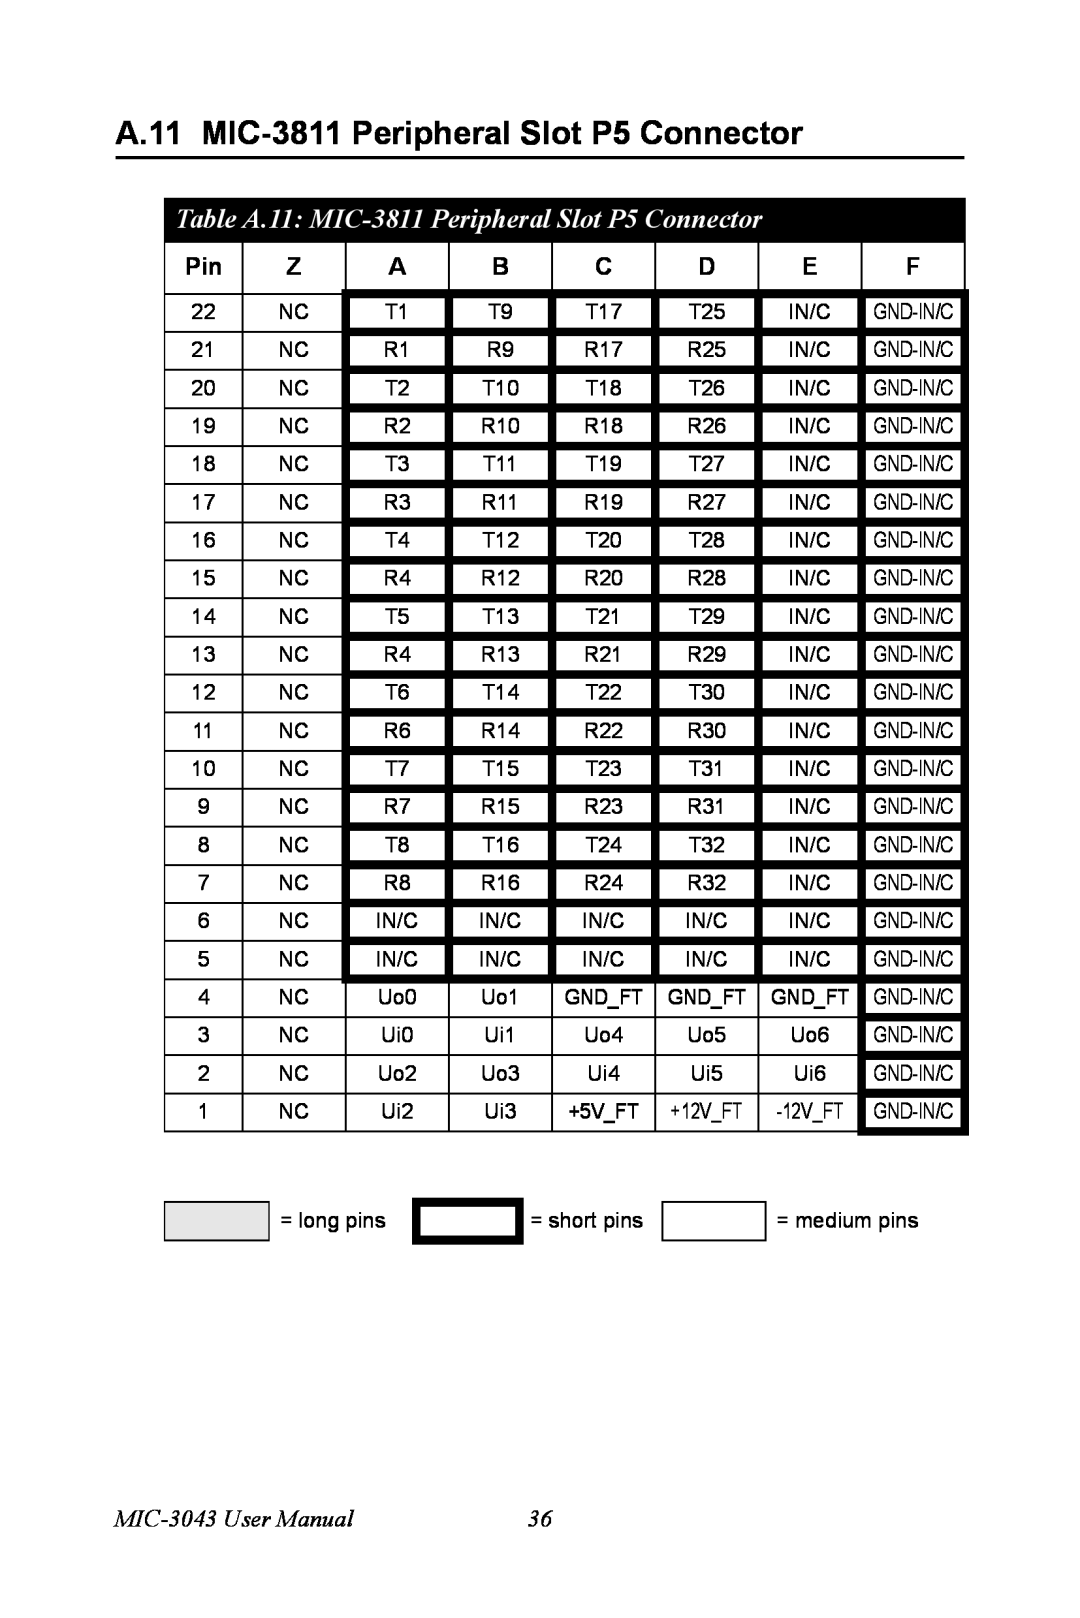 Advantech user manual Table A.11 MIC-3811 Peripheral Slot P5 Connector, MIC-3043 User Manual 